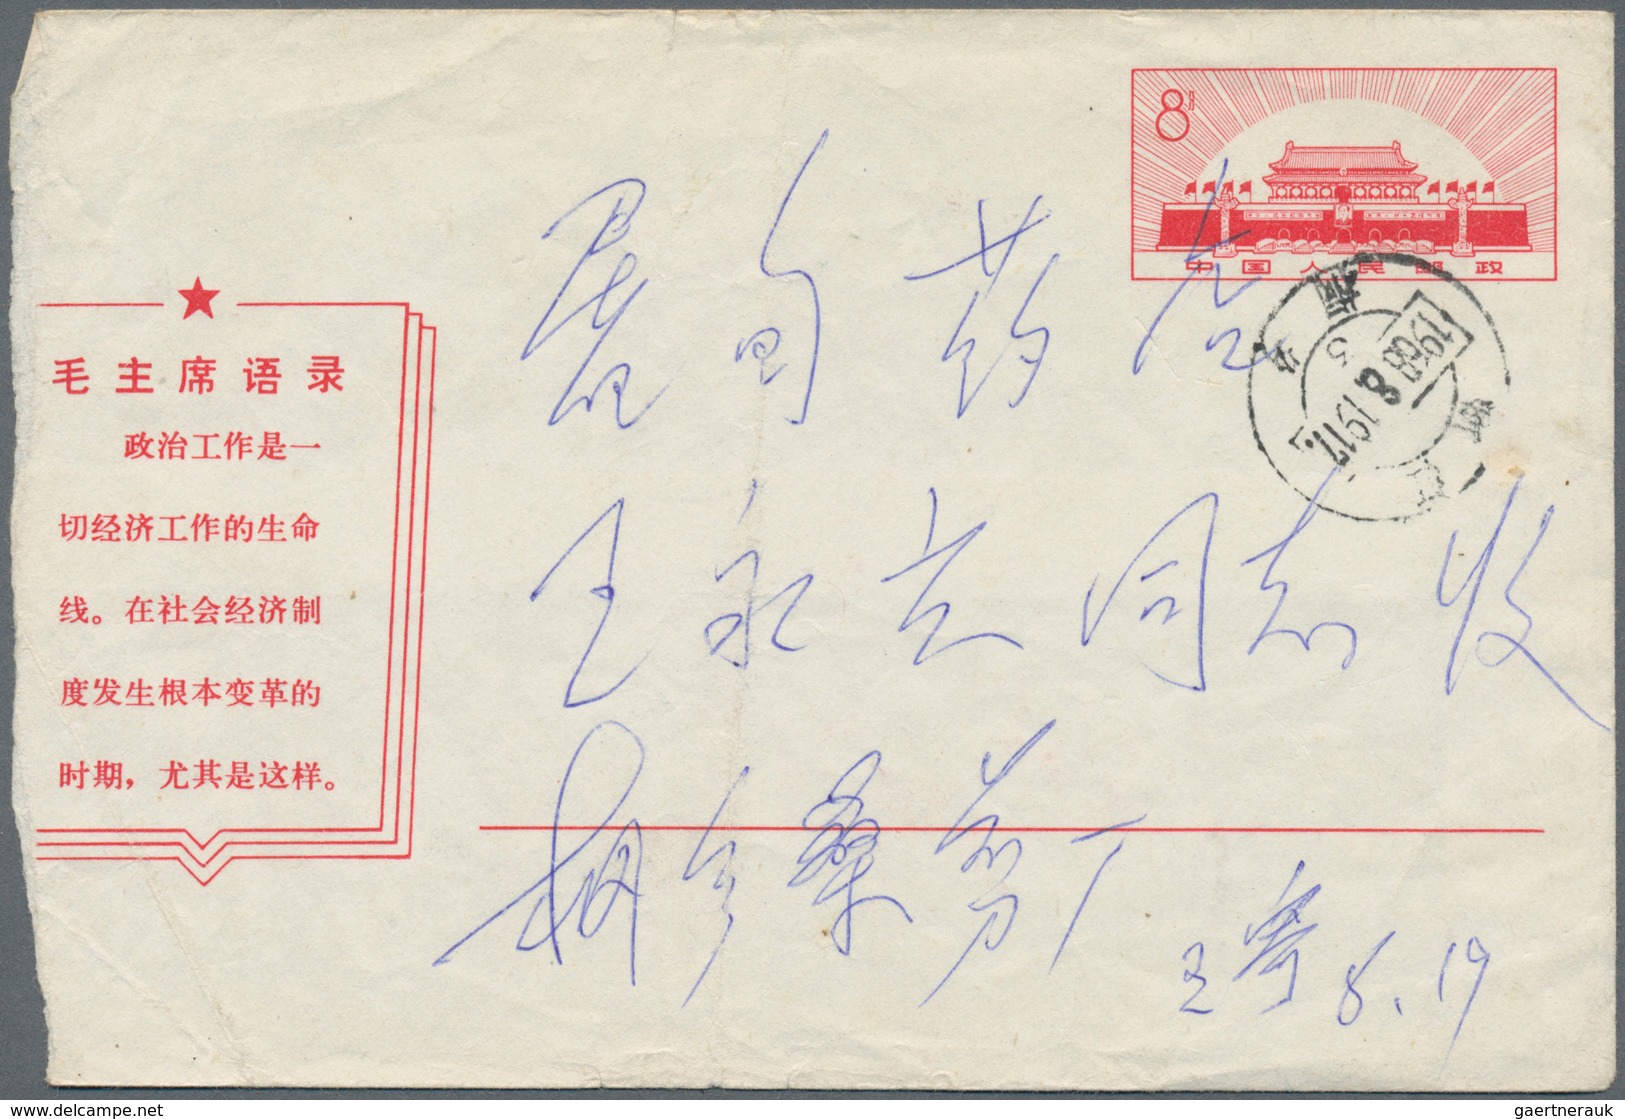 China - Volksrepublik - Ganzsachen: 1967, cultural revolution stationery envelopes with slogans, a c